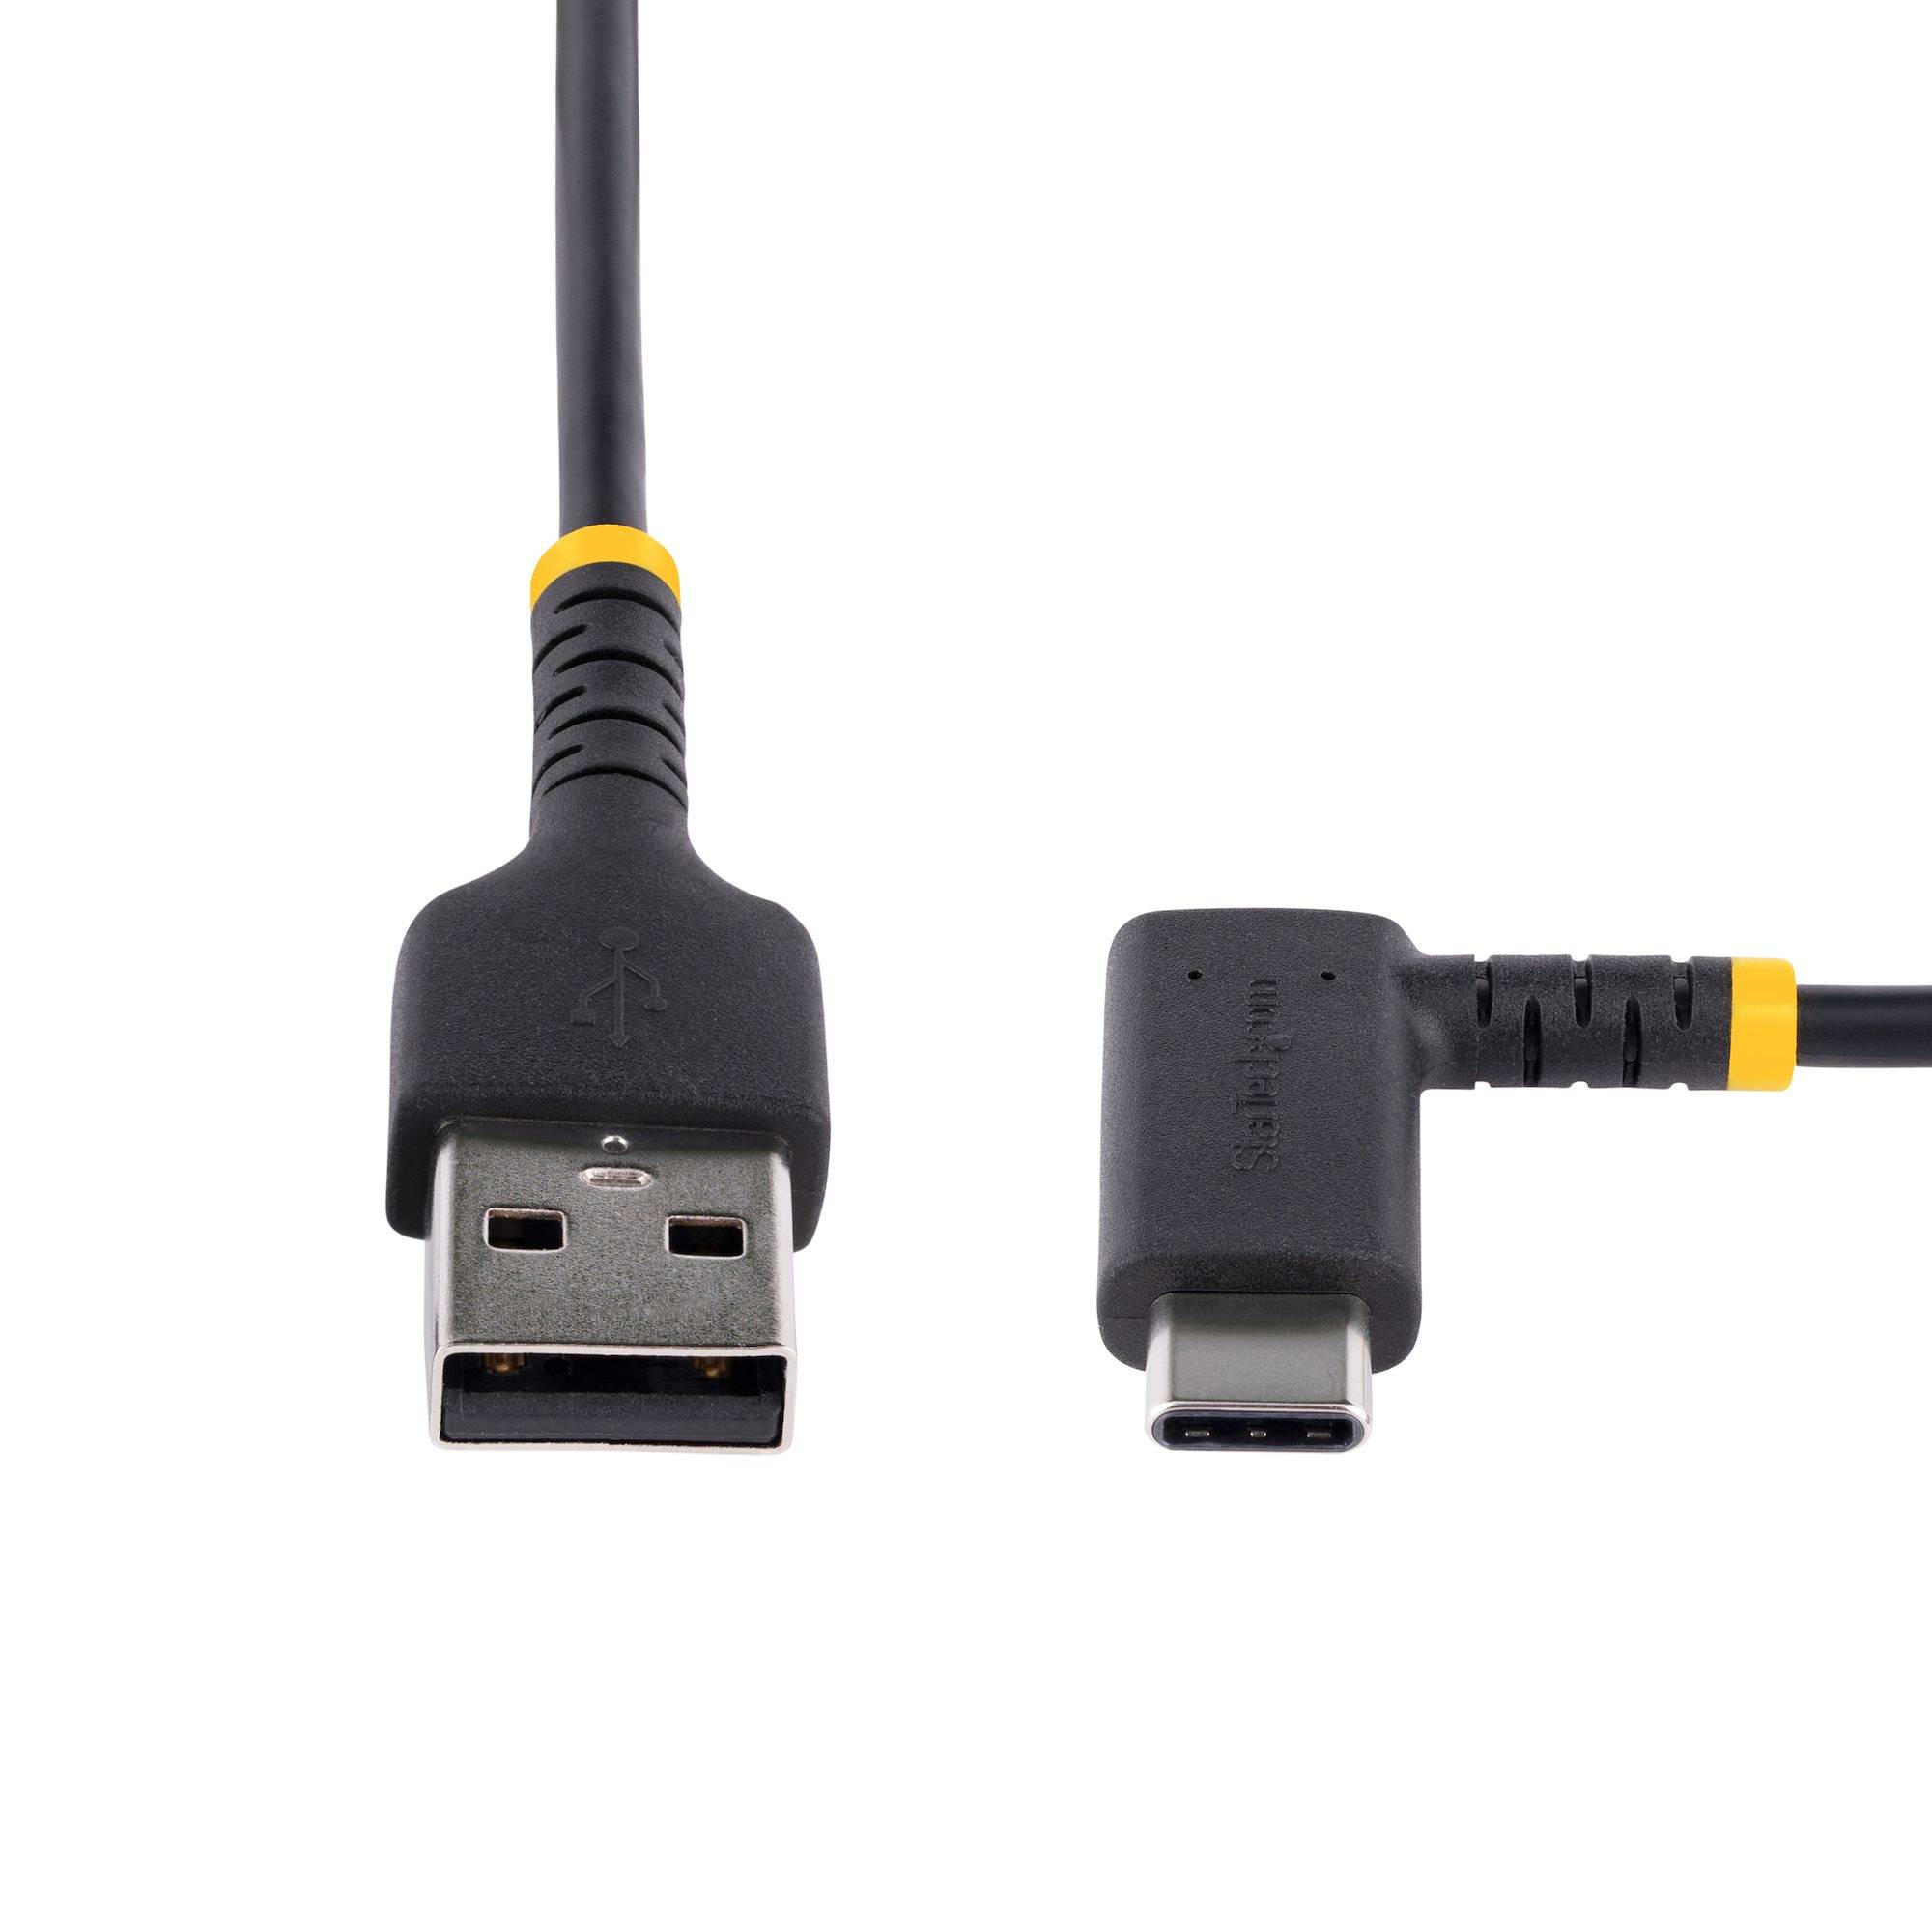 Rca Informatique - image du produit : USB-A TO USB-C CHARGING CABLE 30CM RIGHT ANGLE USB-C USBC CABL